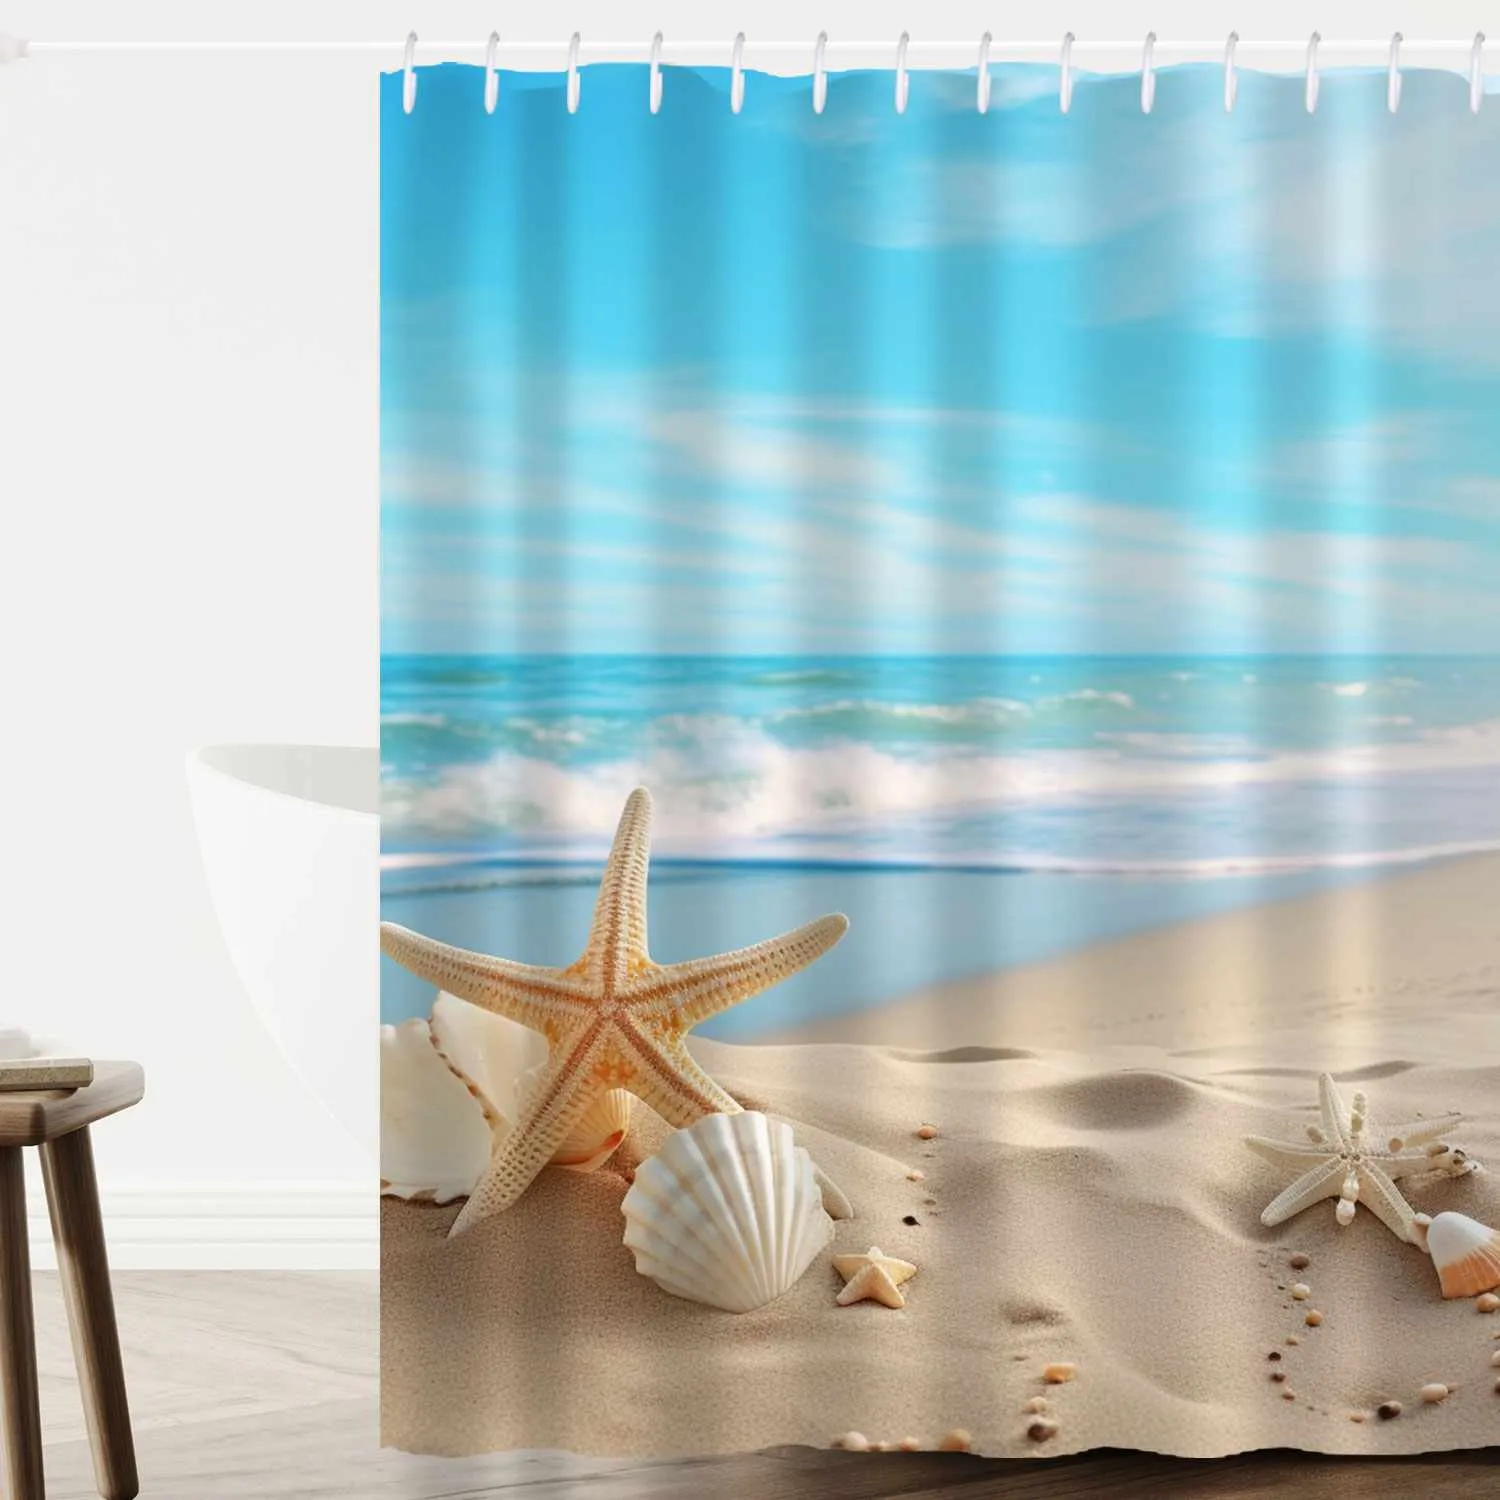 Guest bathroom shower curtain ideas: Starfish and shells on the beach shower curtain.